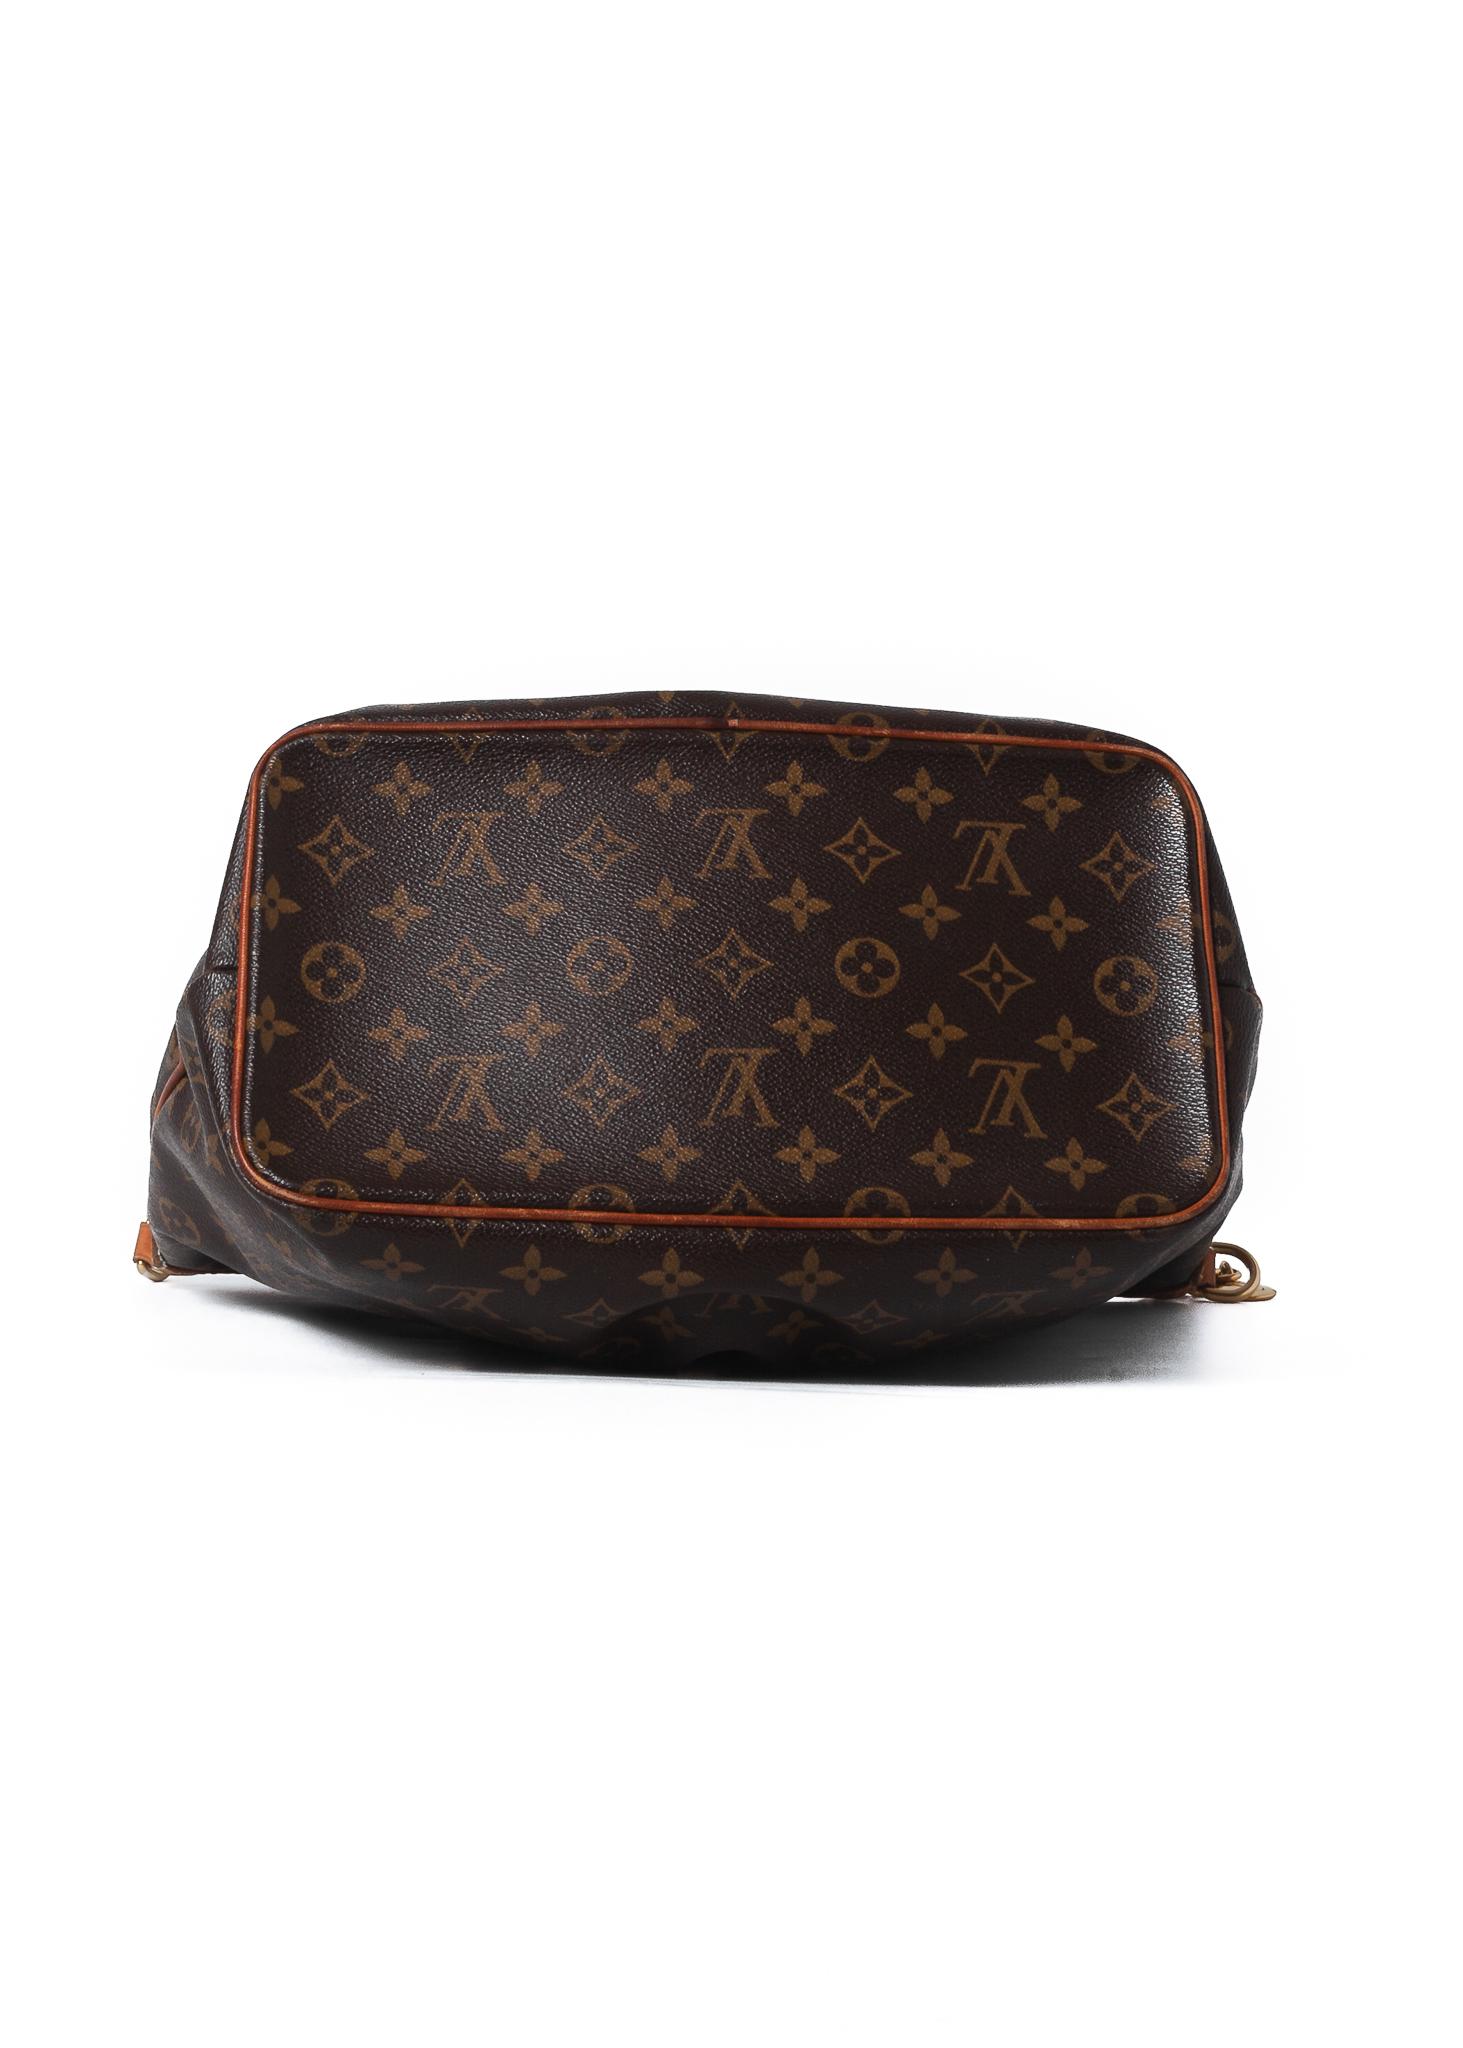 Louis Vuitton Monogram Palermo PM Handbag Purse In Good Condition For Sale In Montreal, Quebec